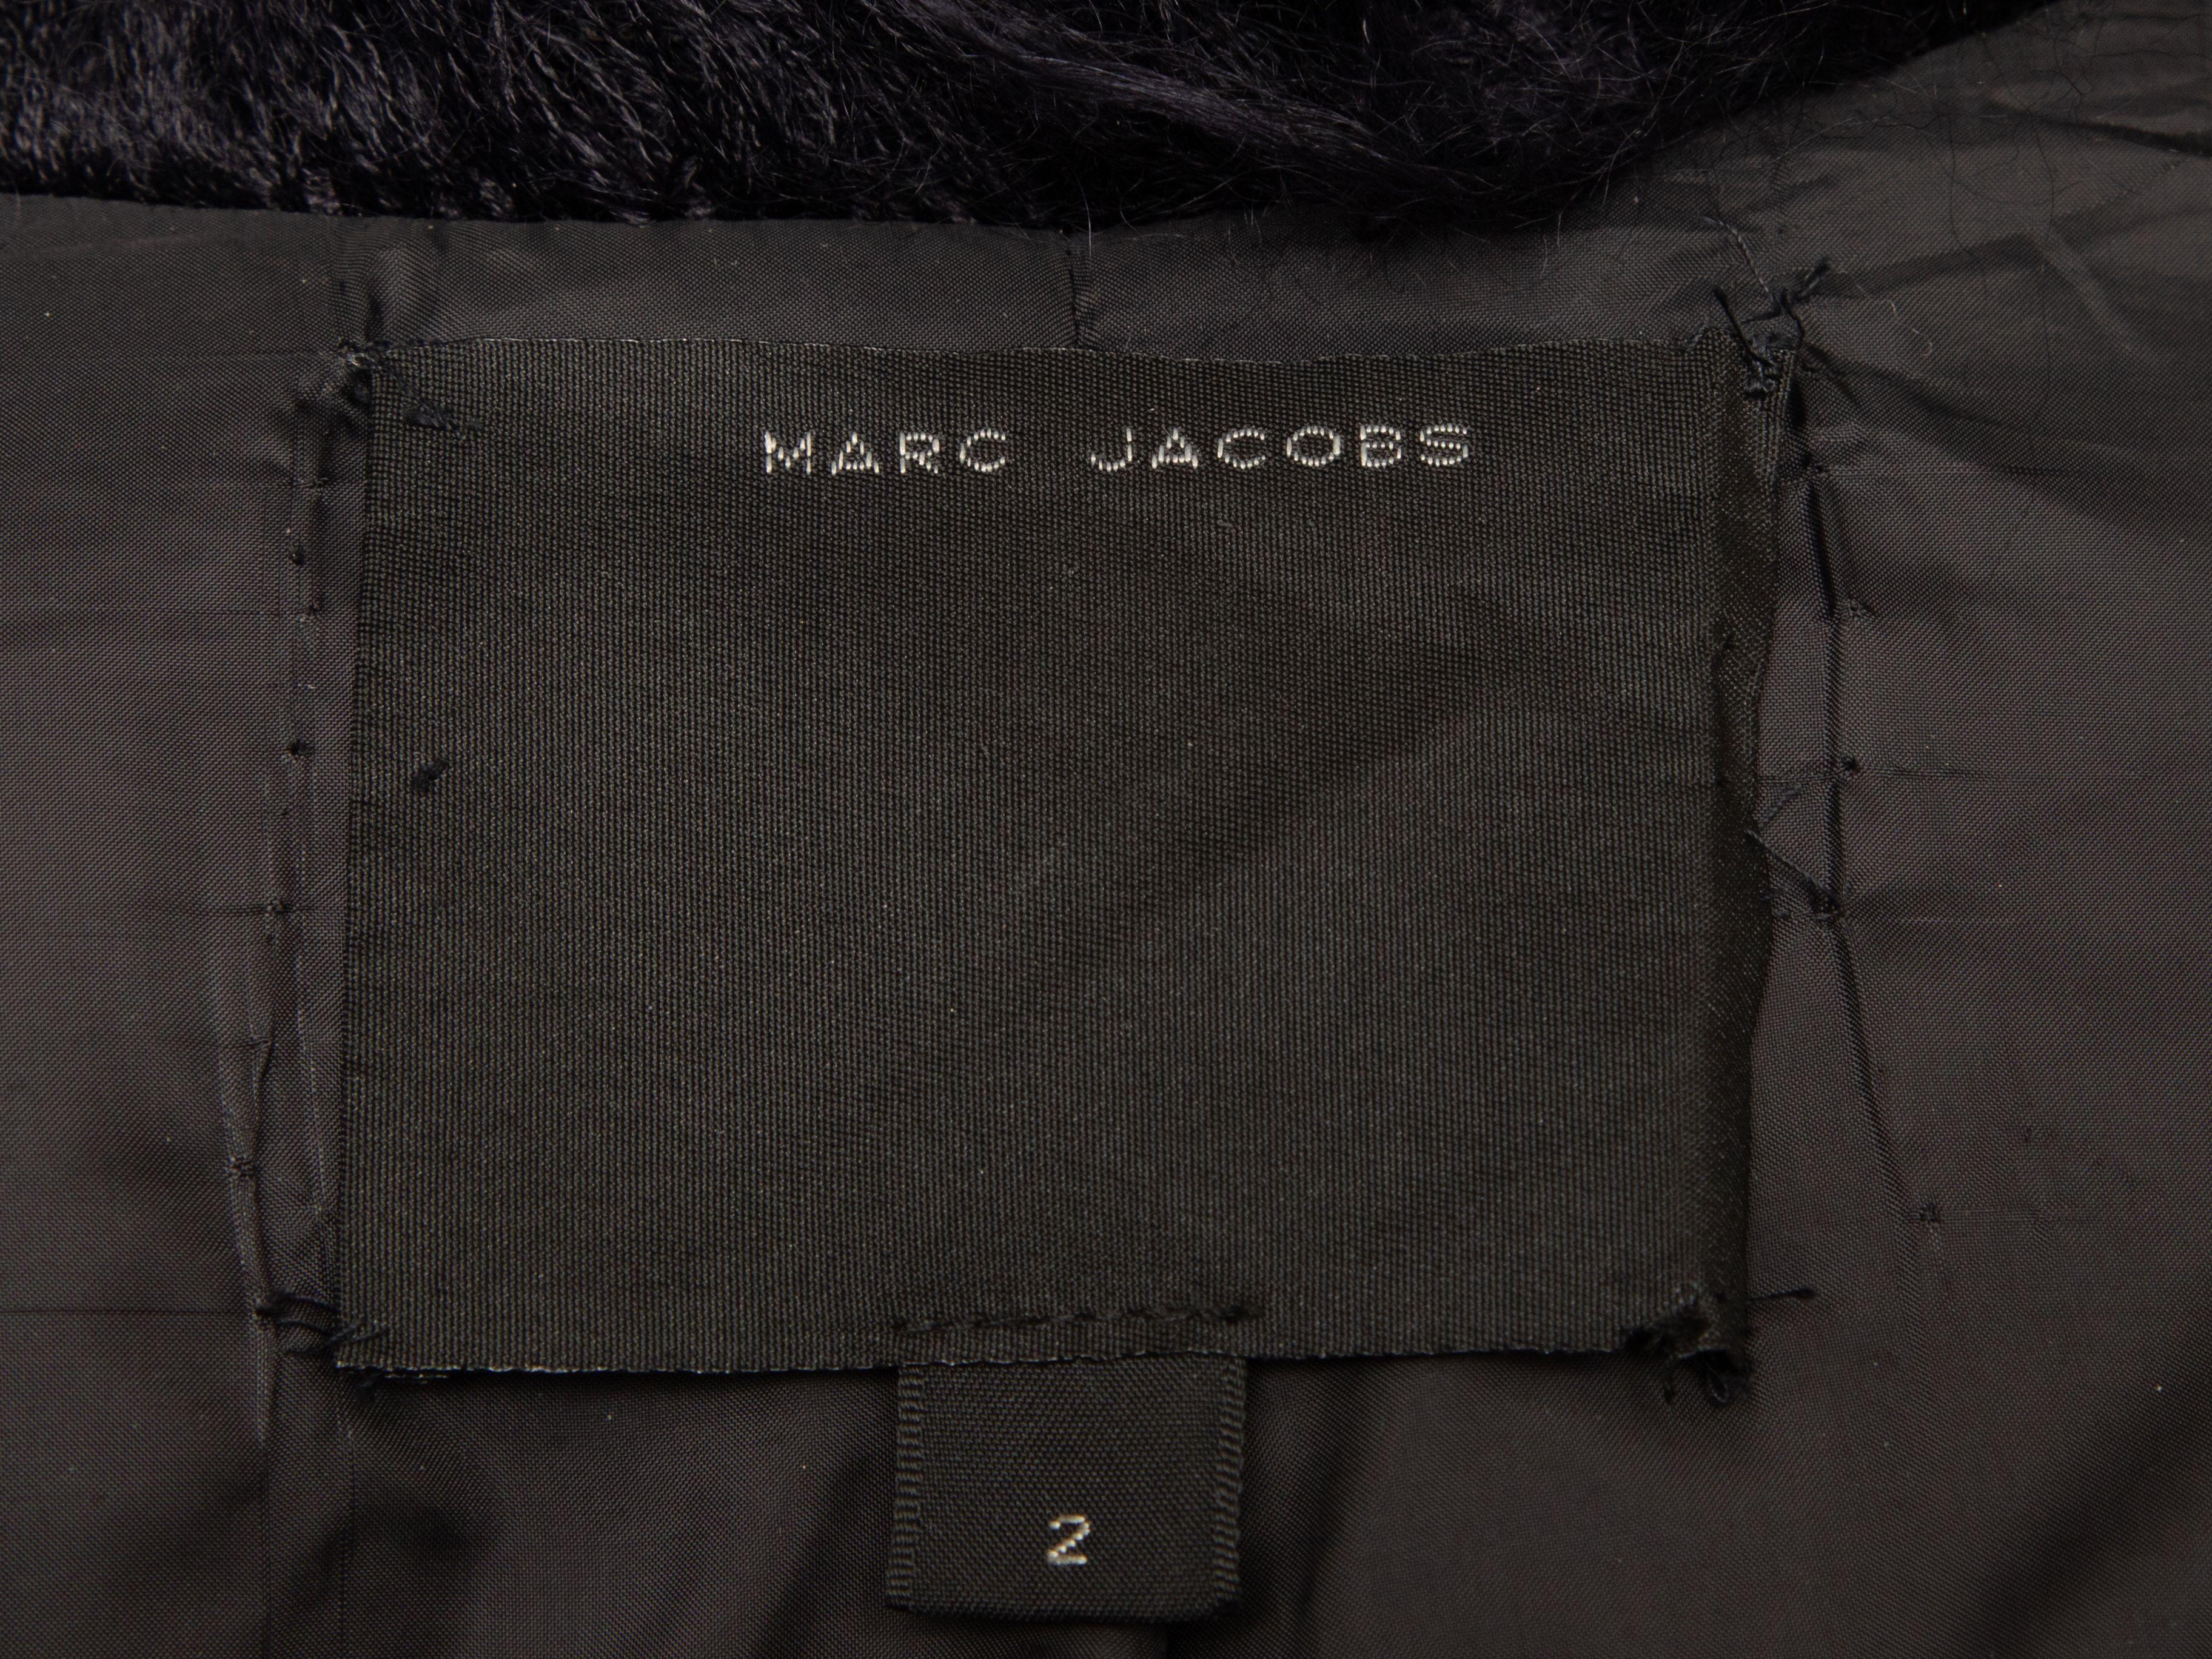 Product Details: Vintage black shaggy faux fur coat by Marc Jacobs. Notched collar. Dual hip pockets. Button closures at center front. 34